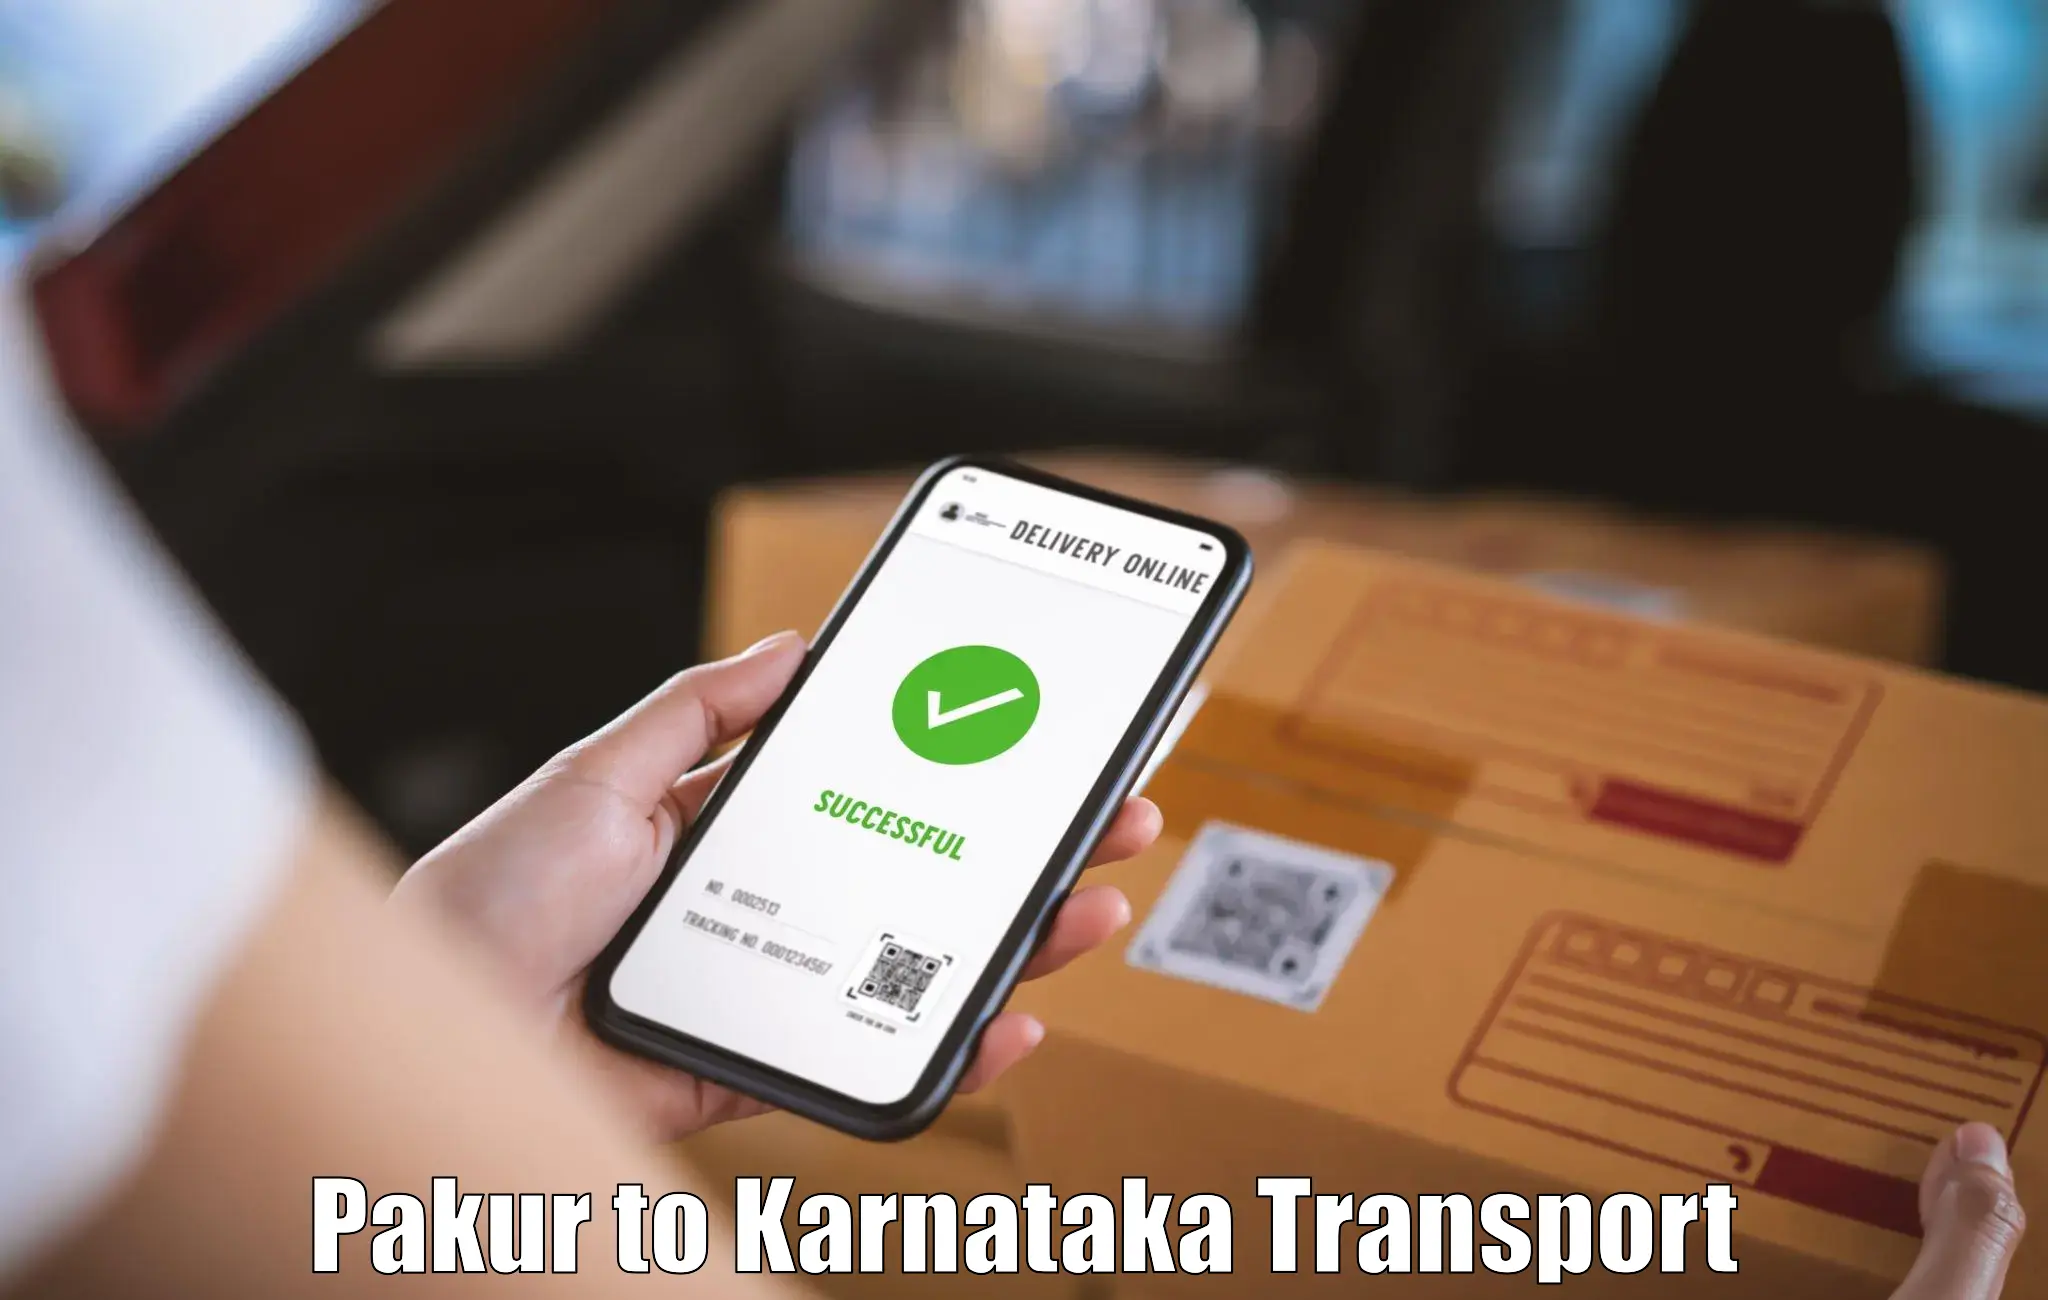 Shipping partner in Pakur to Bangalore